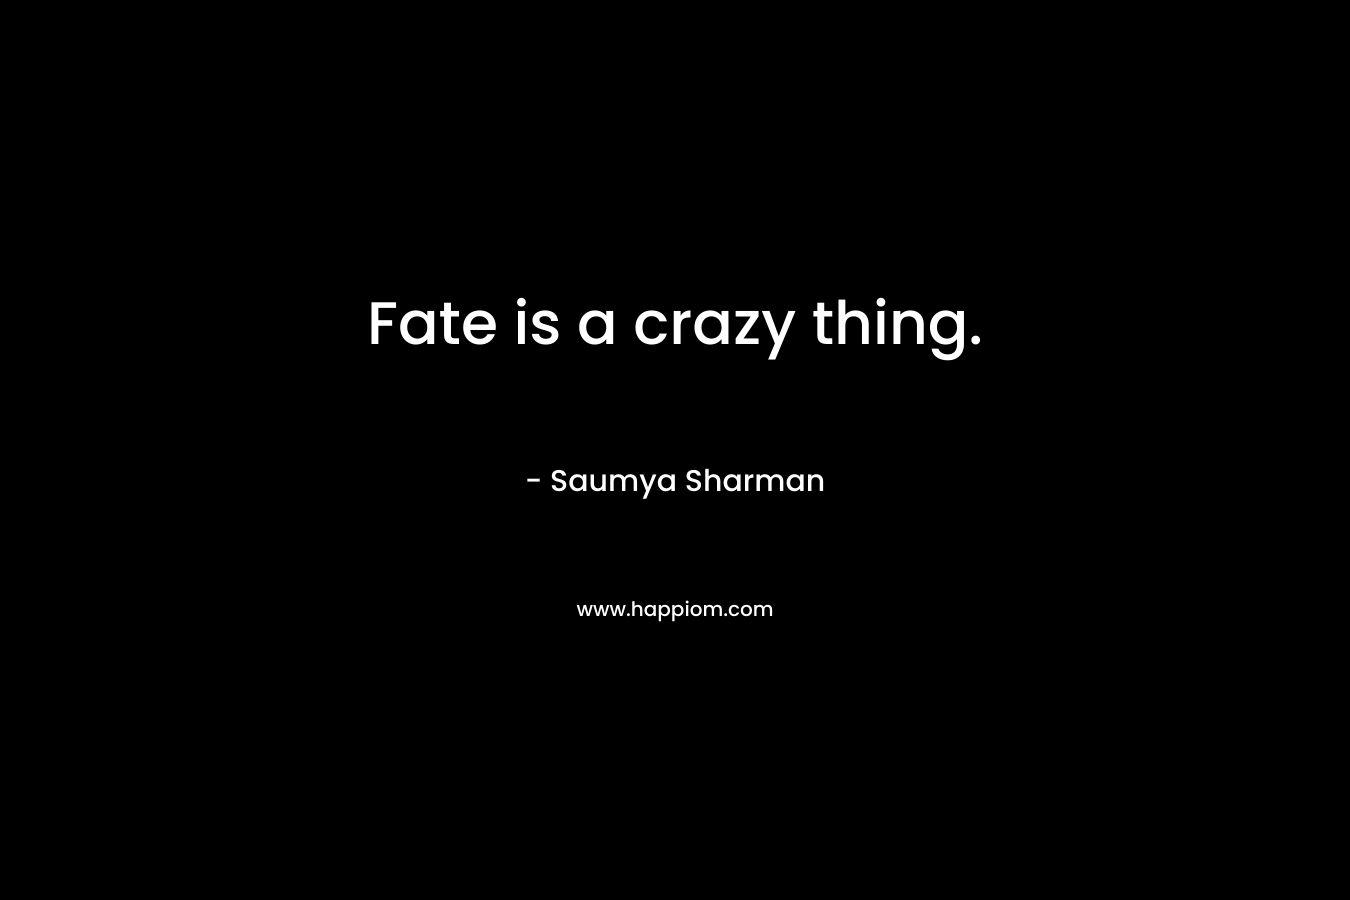 Fate is a crazy thing. – Saumya Sharman